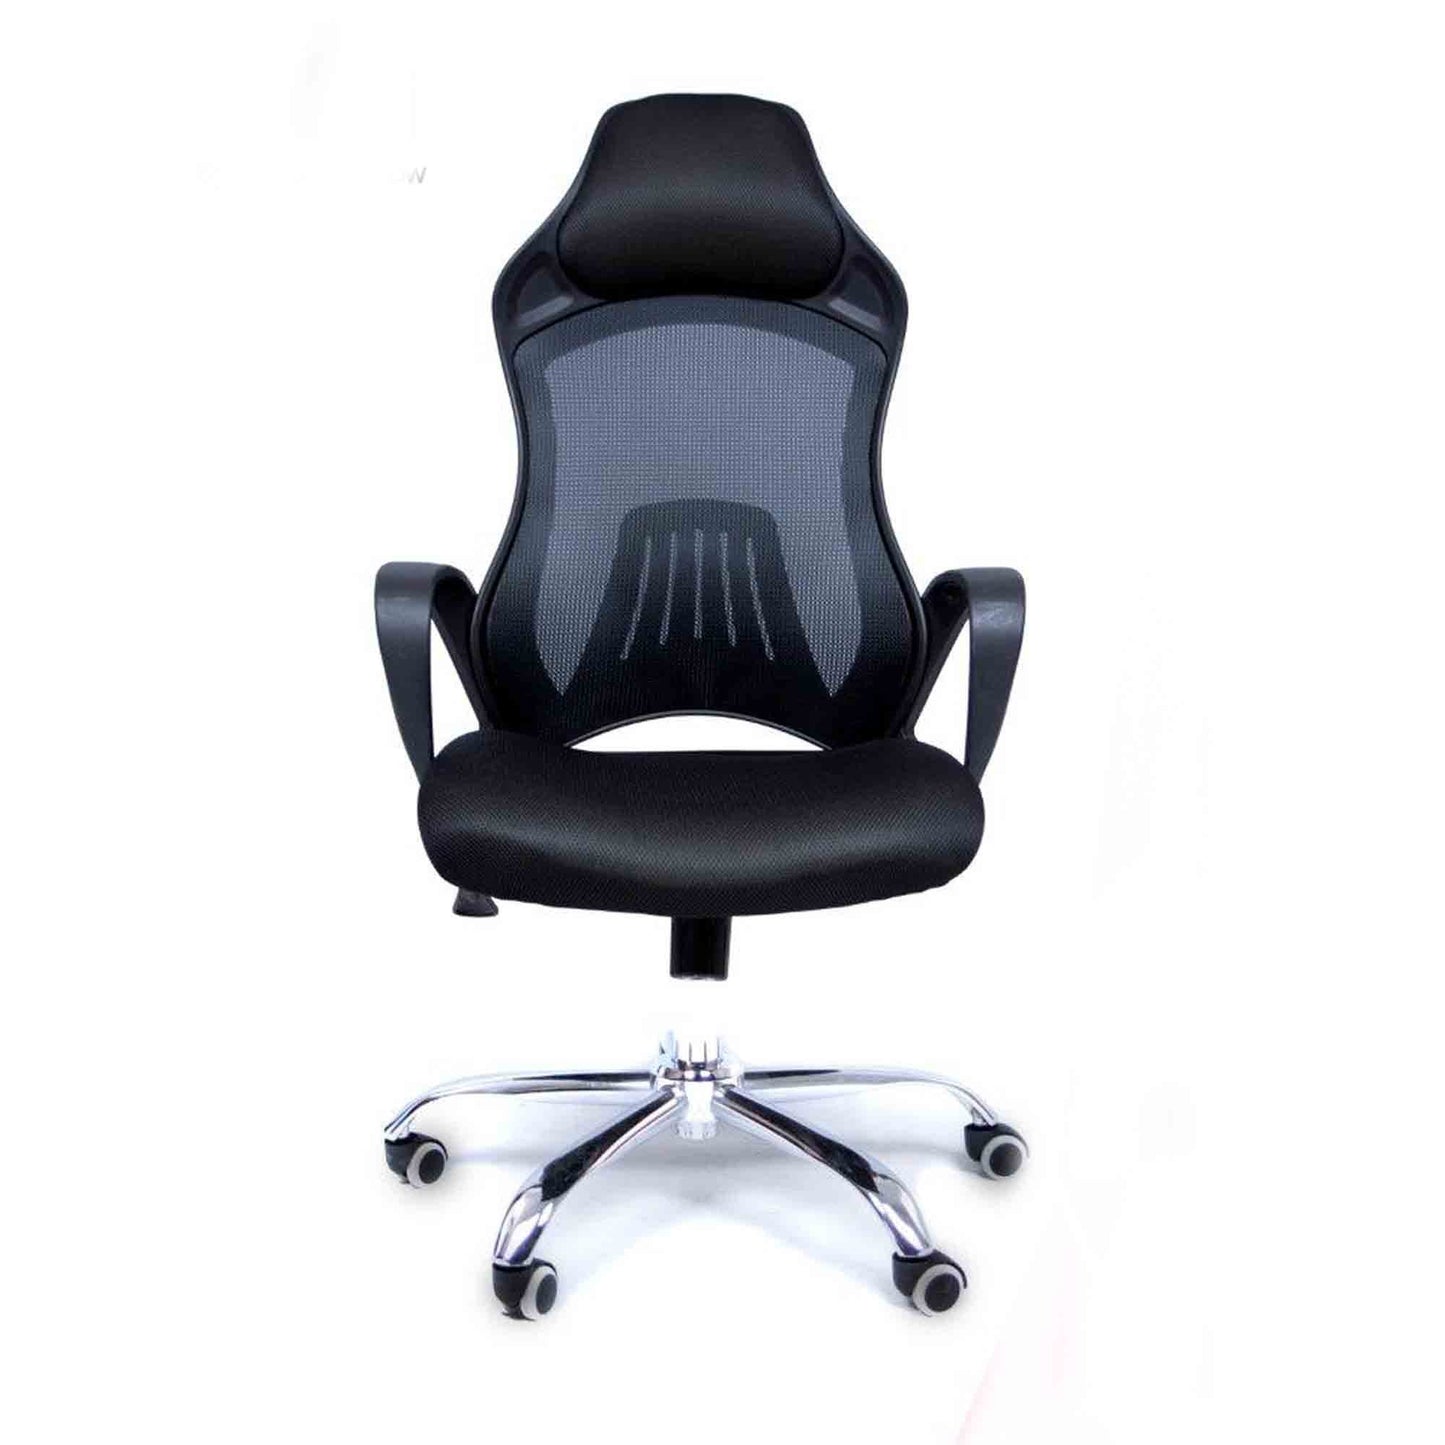 Office Chair - mch87hib